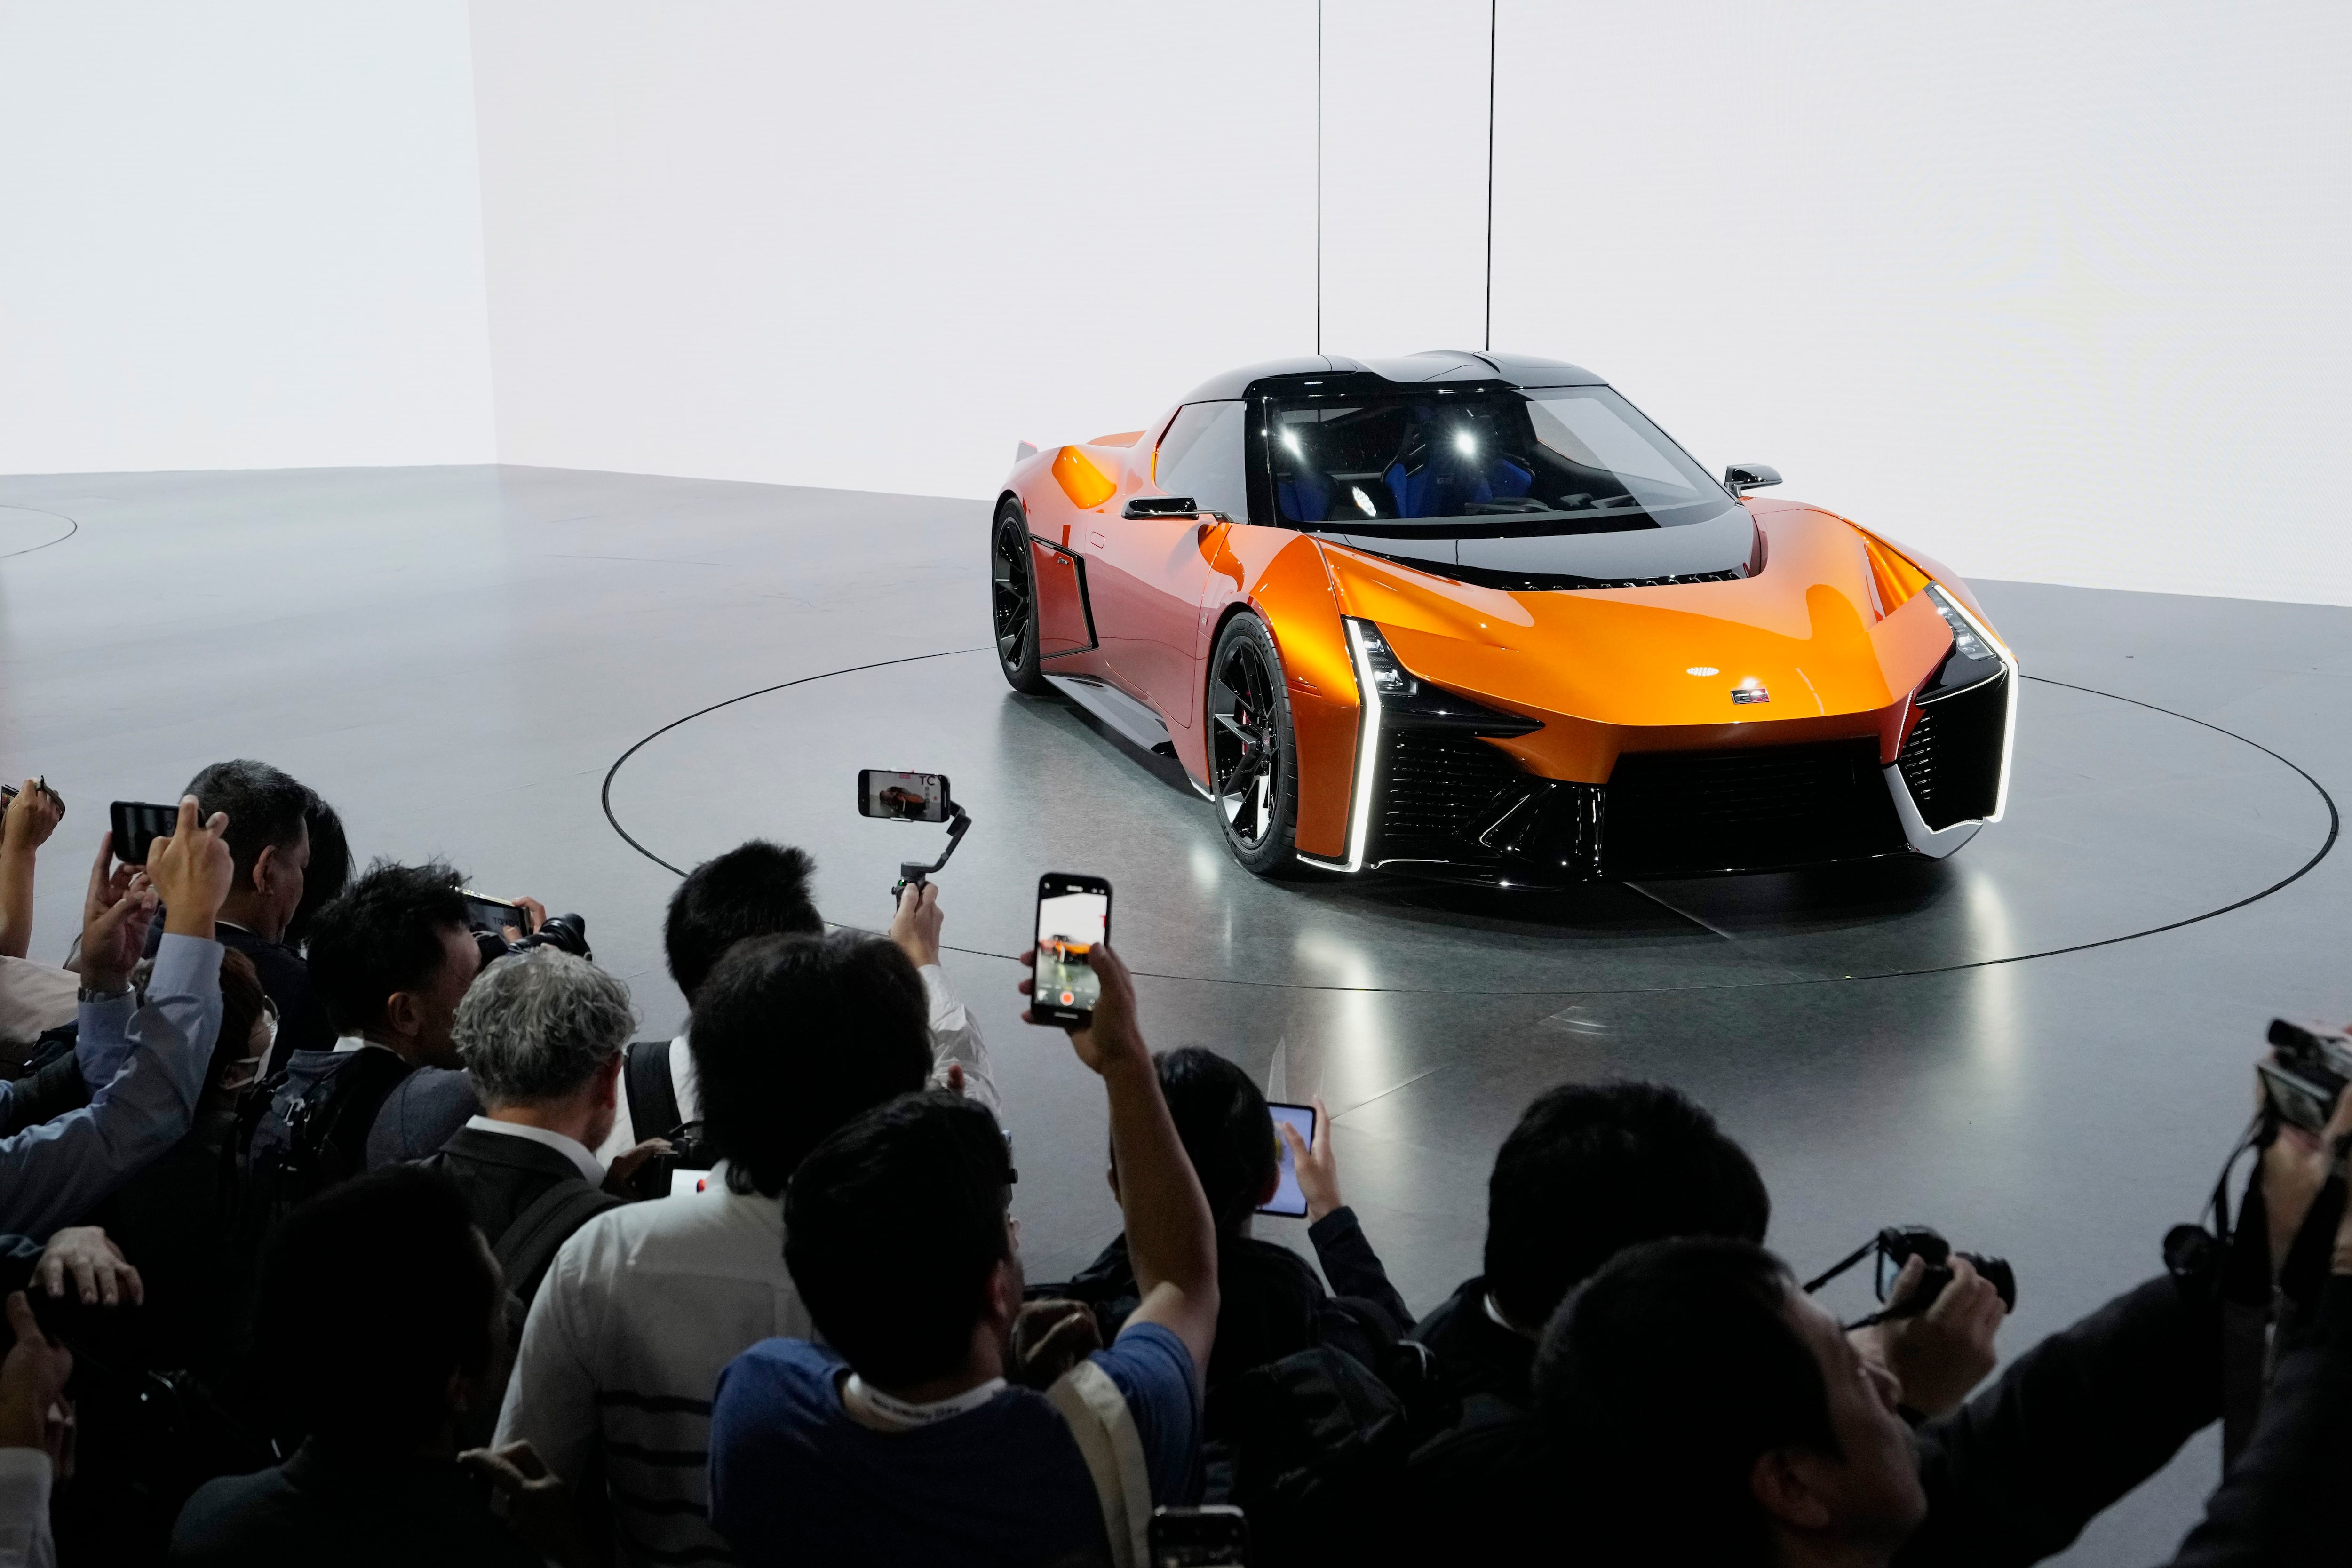 Toyota sports car concept imagines electric MR2 successor